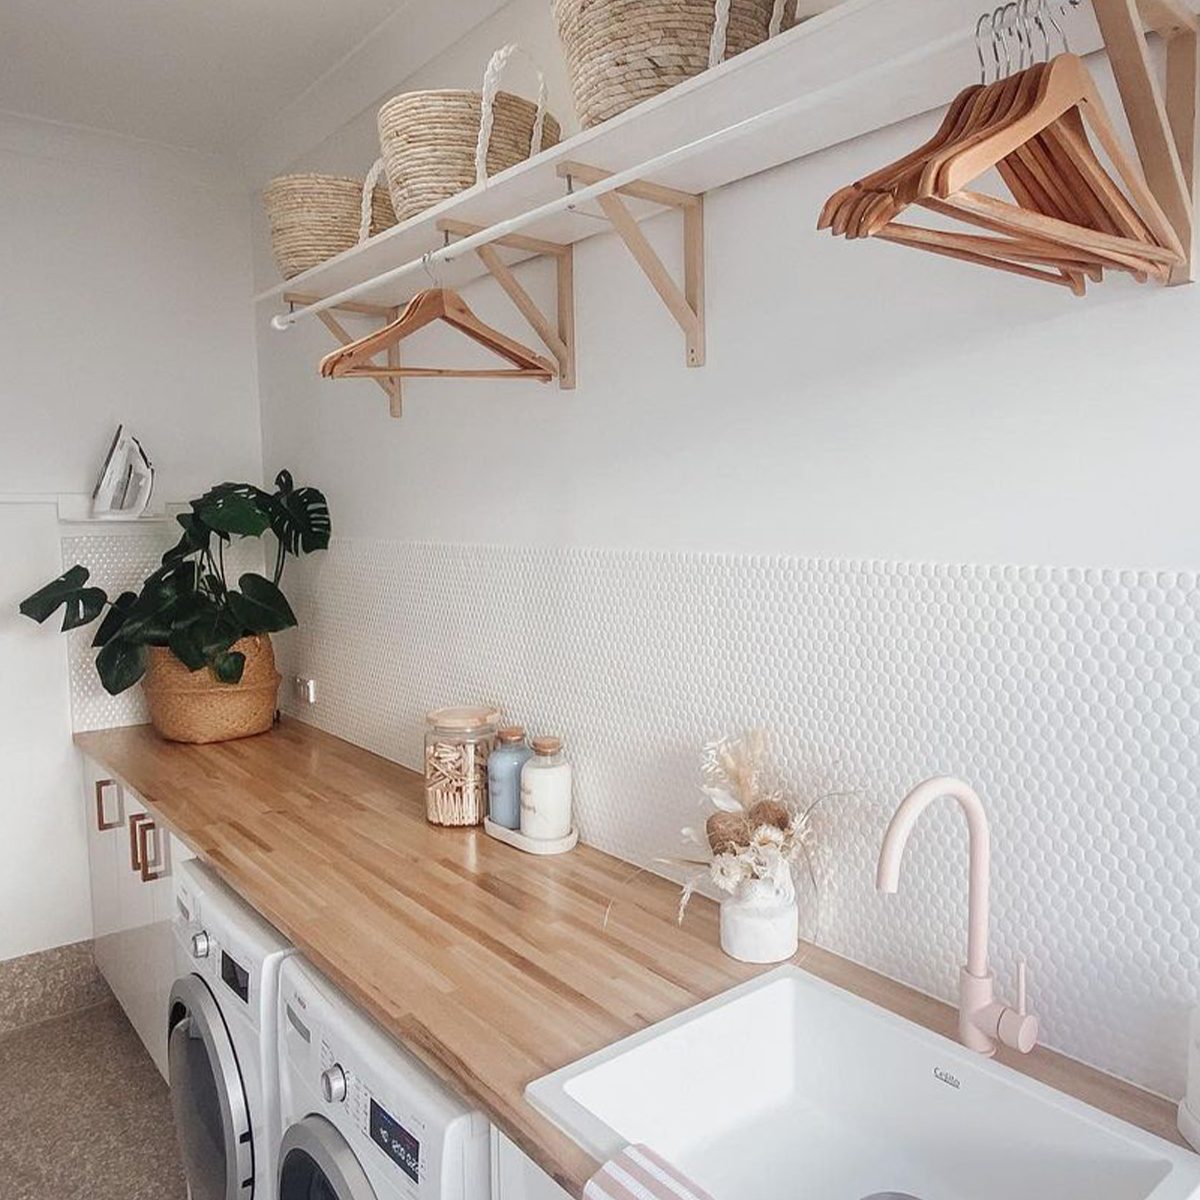 8 Laundry Room Tile Design Ideas